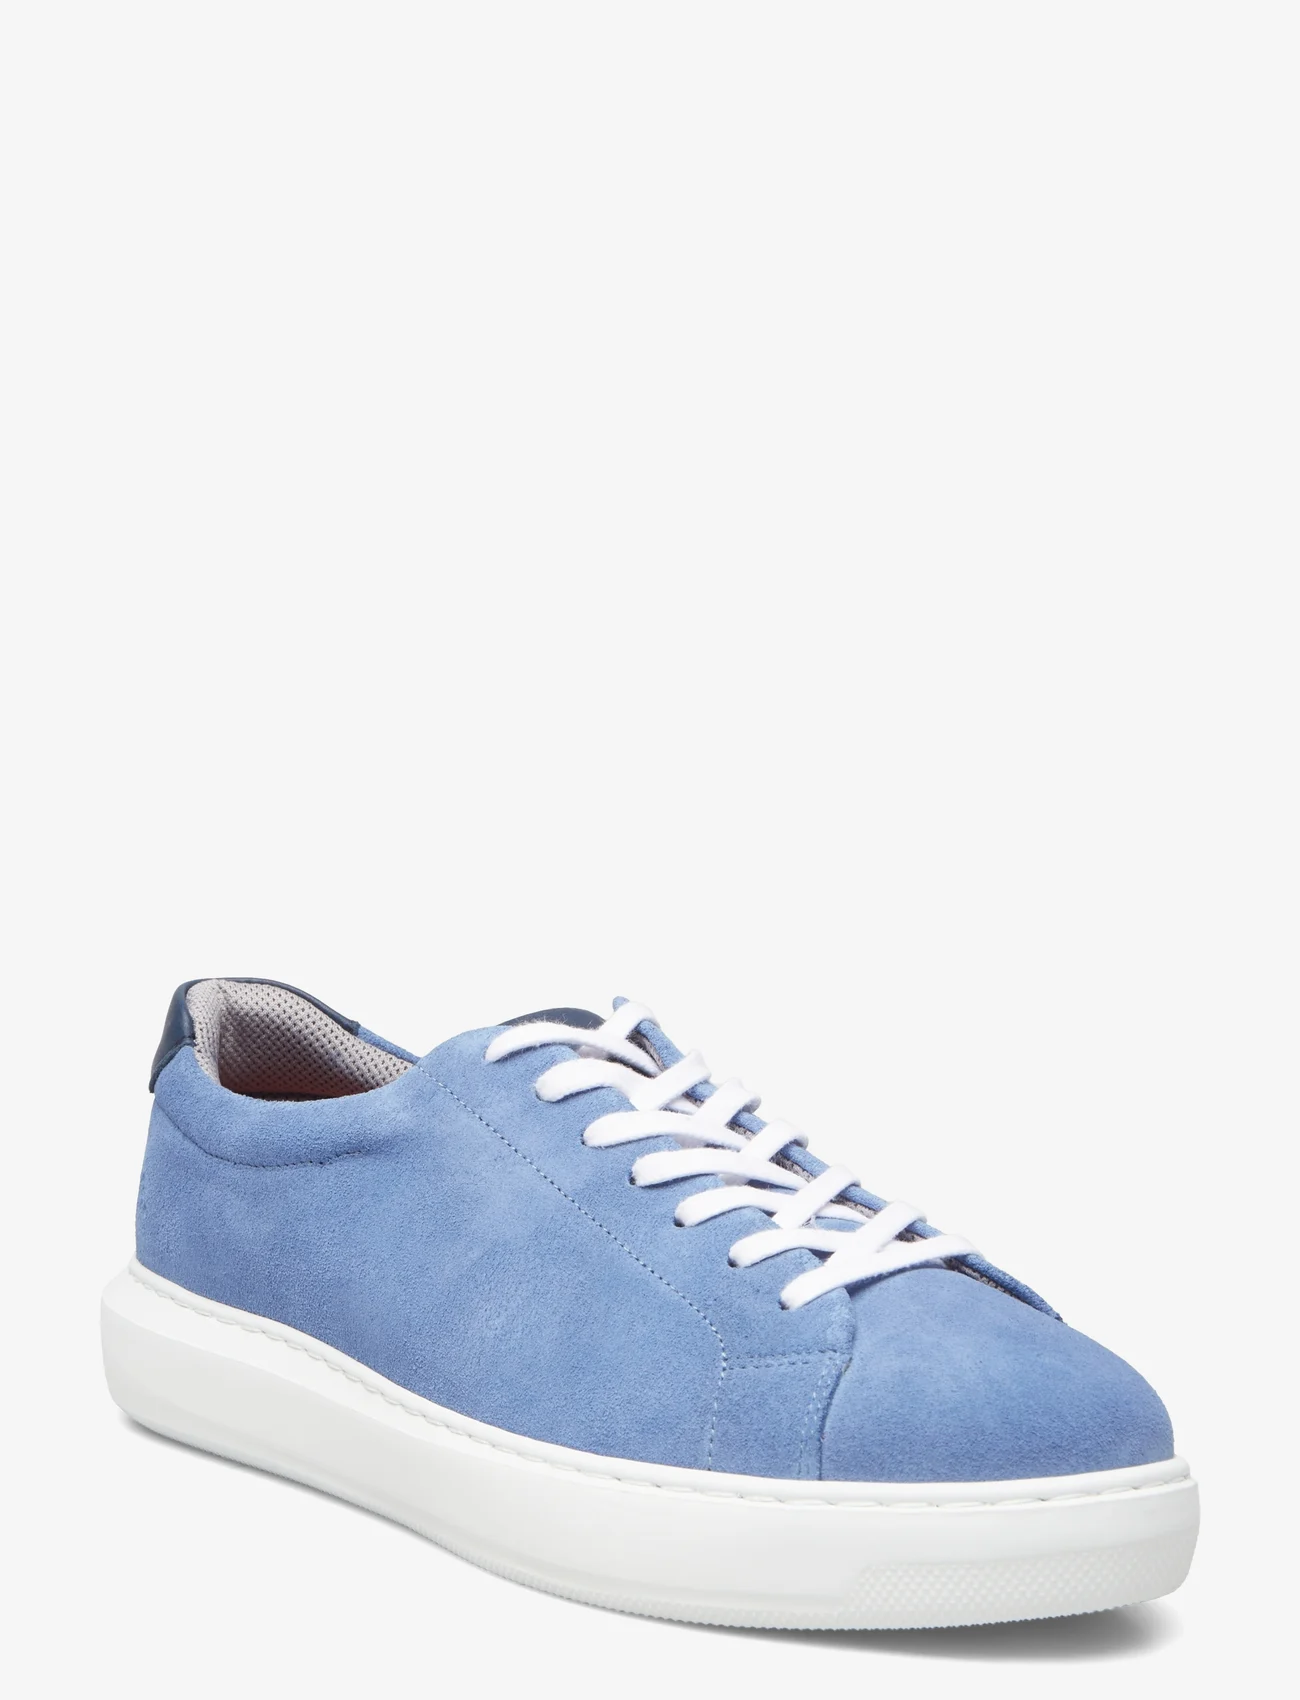 Bianco - BIAGARY Sneaker Suede - låga sneakers - blue - 0